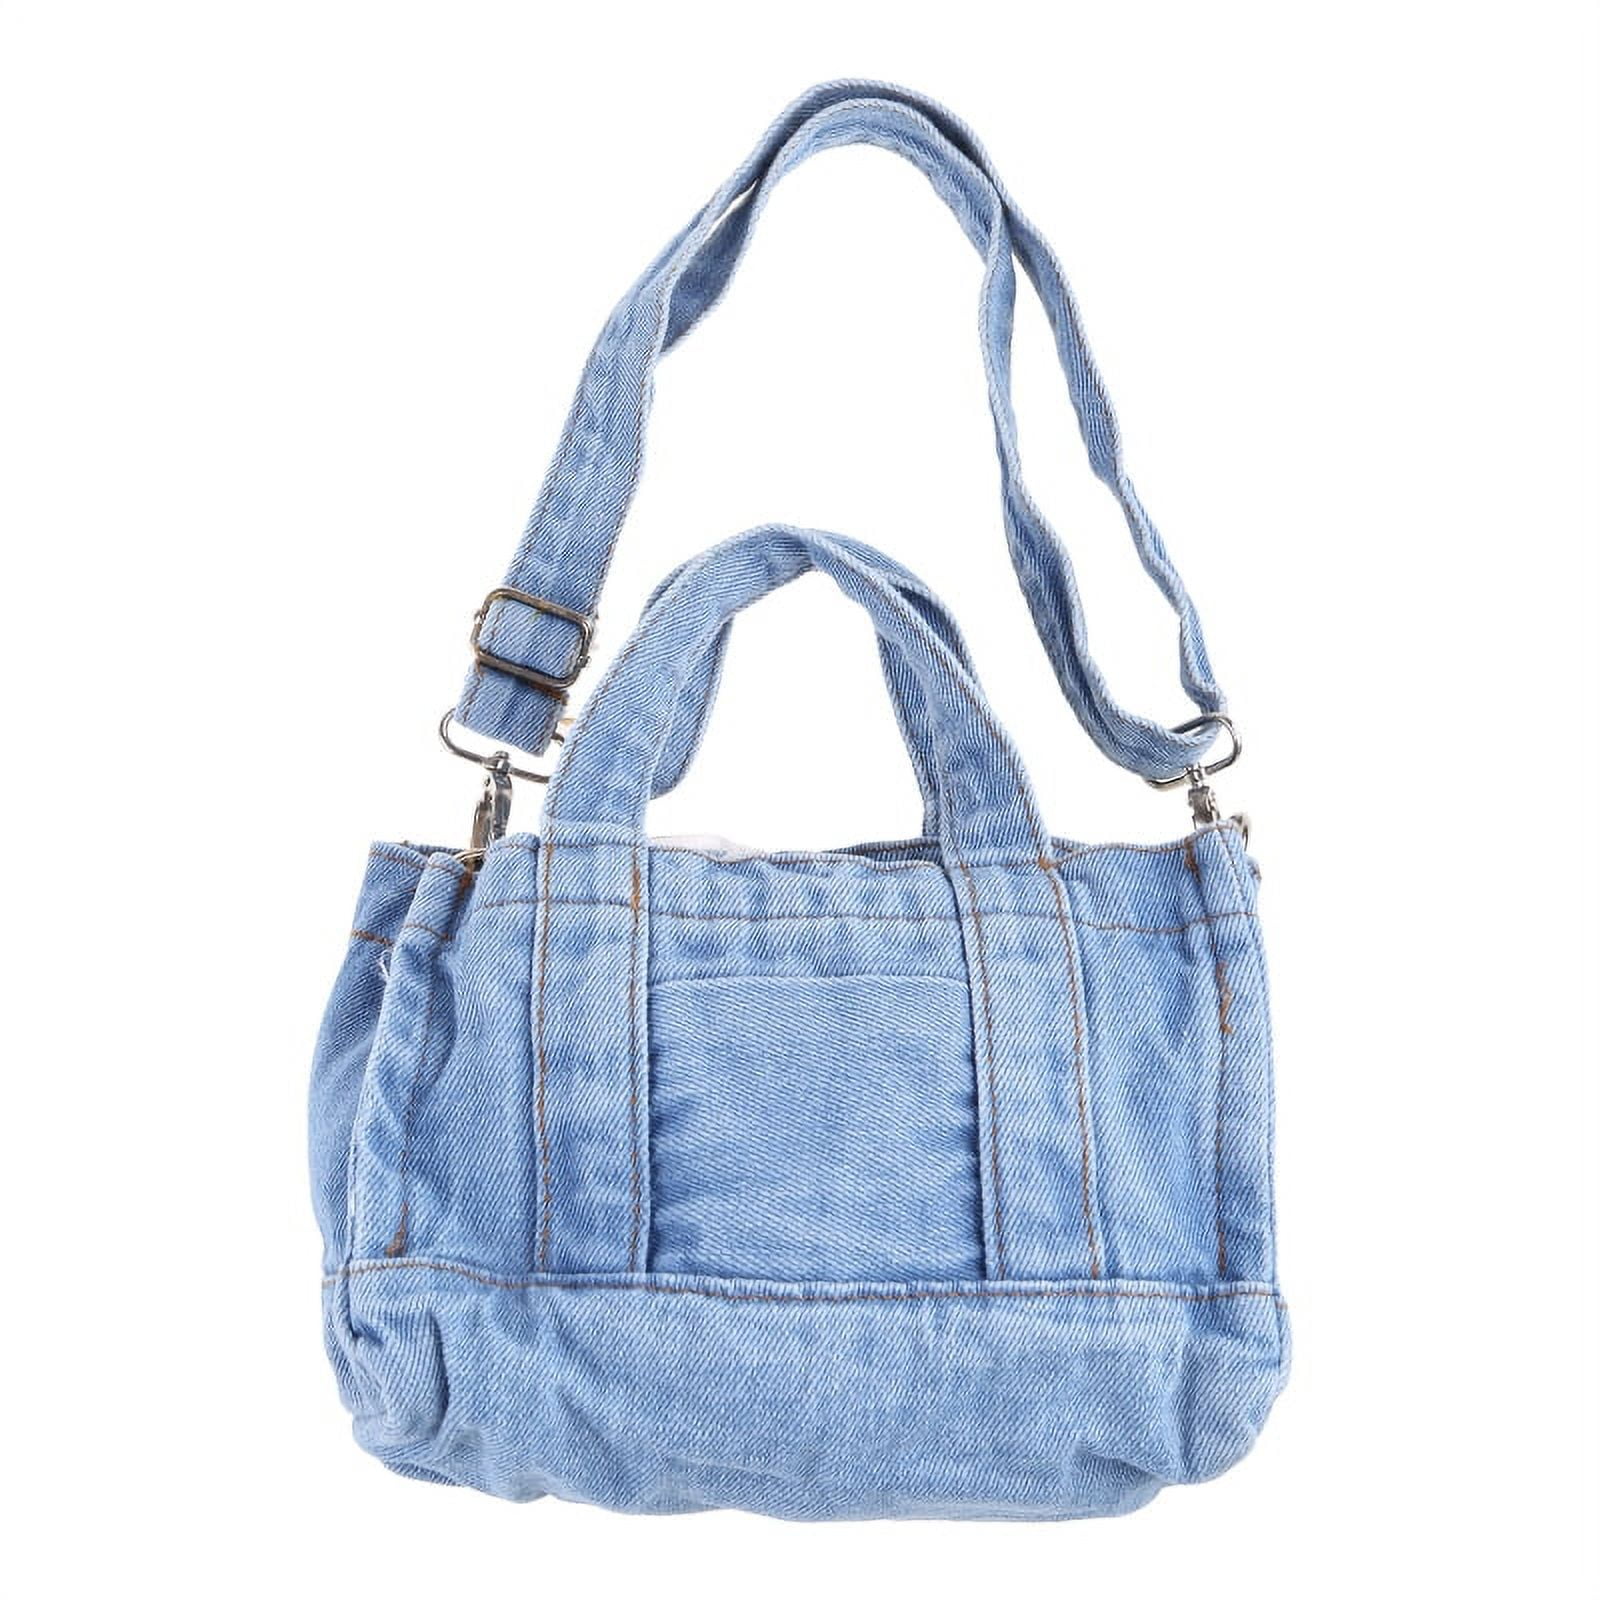 Buy SHOPATHON INDIA Denim Blue Jeans Shoulder Bag Women's Hand Bag at  Amazon.in